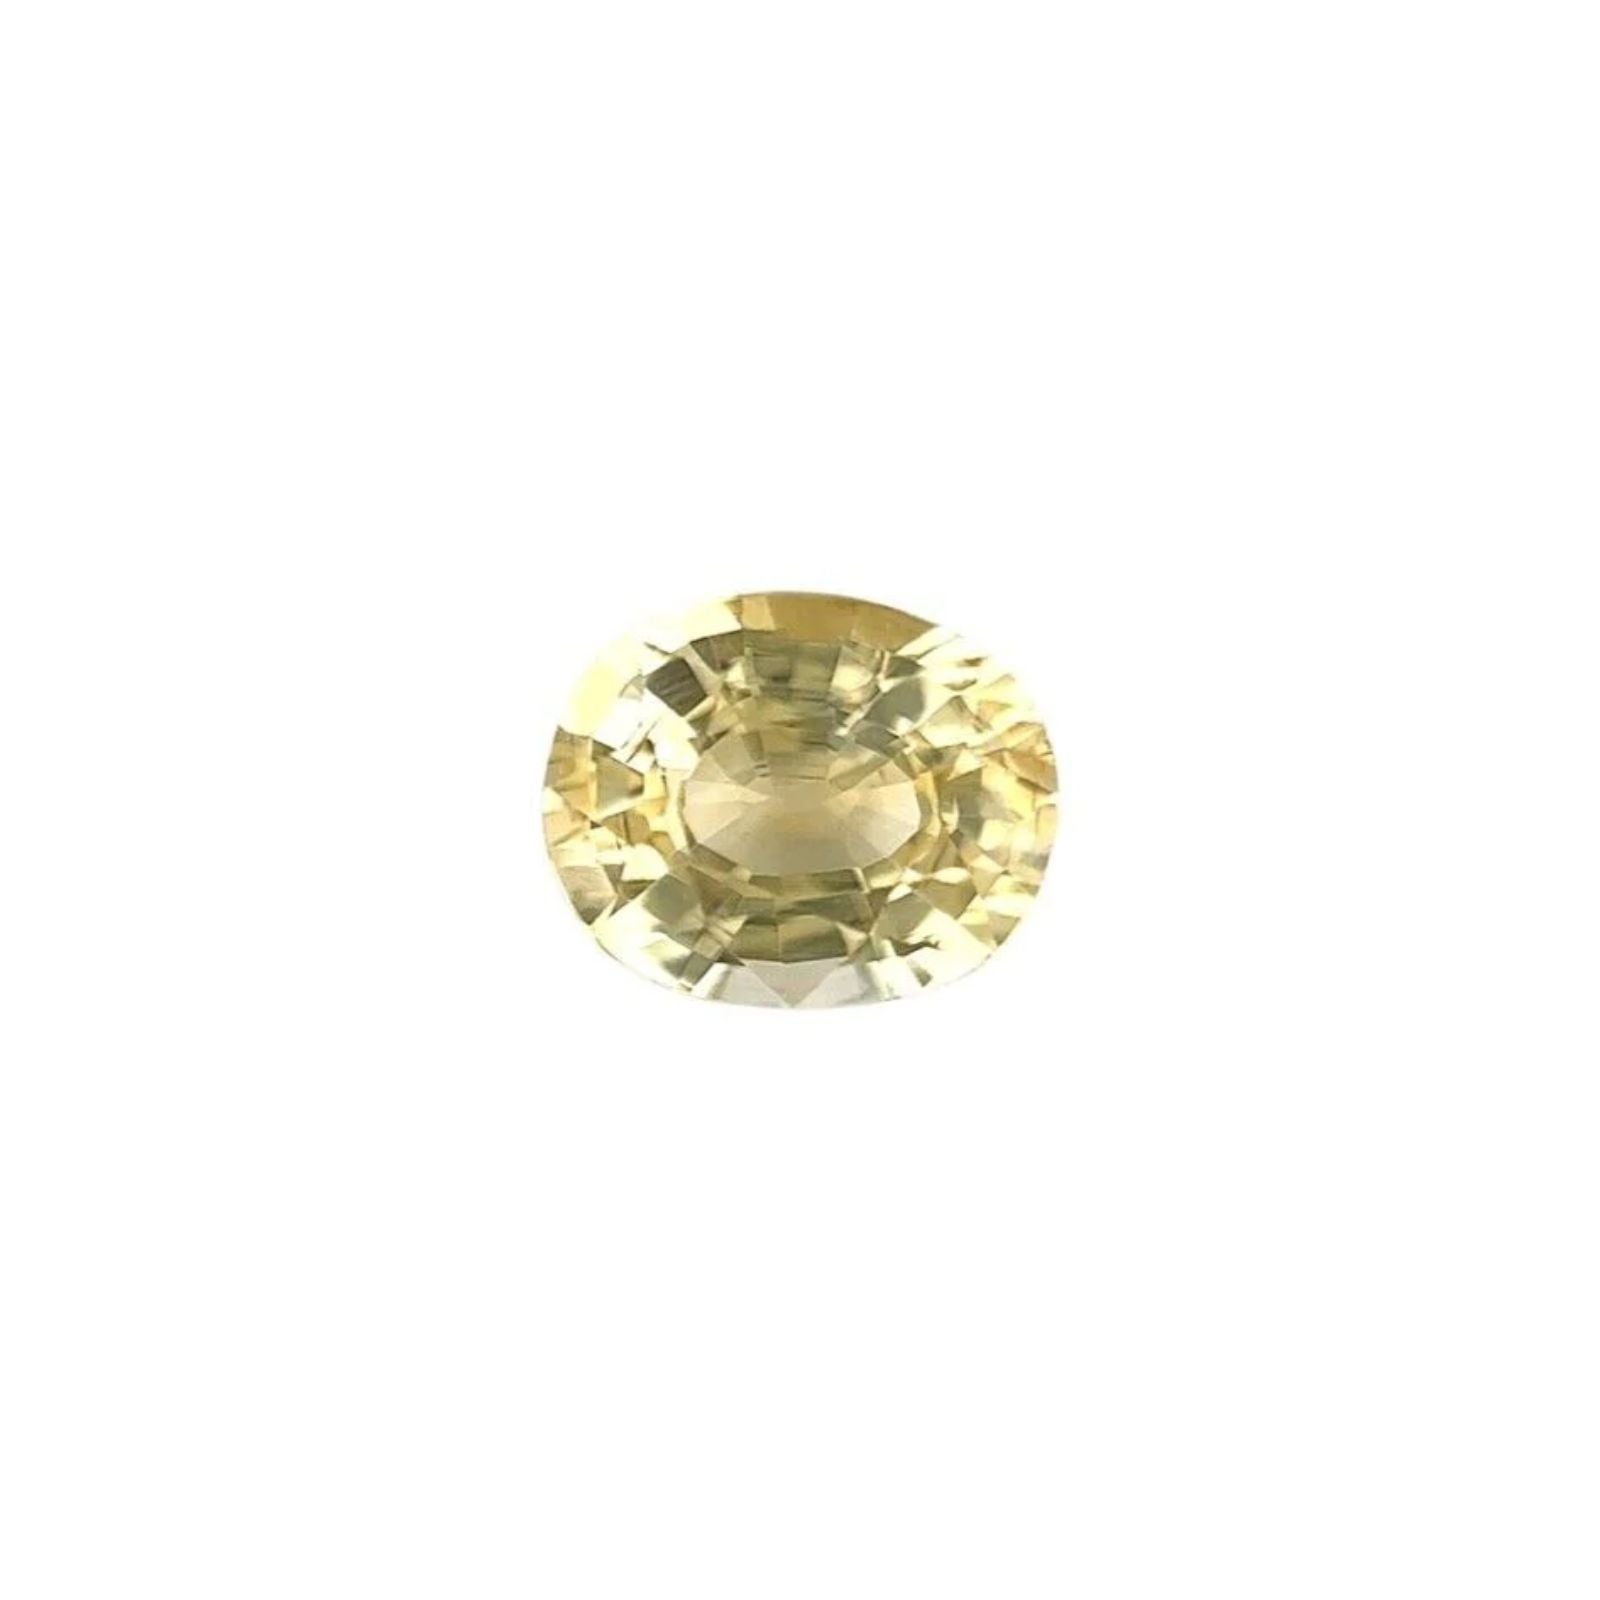 0.68ct Vivid Yellow Ceylon Sapphire Oval Cut Loose Gemstone